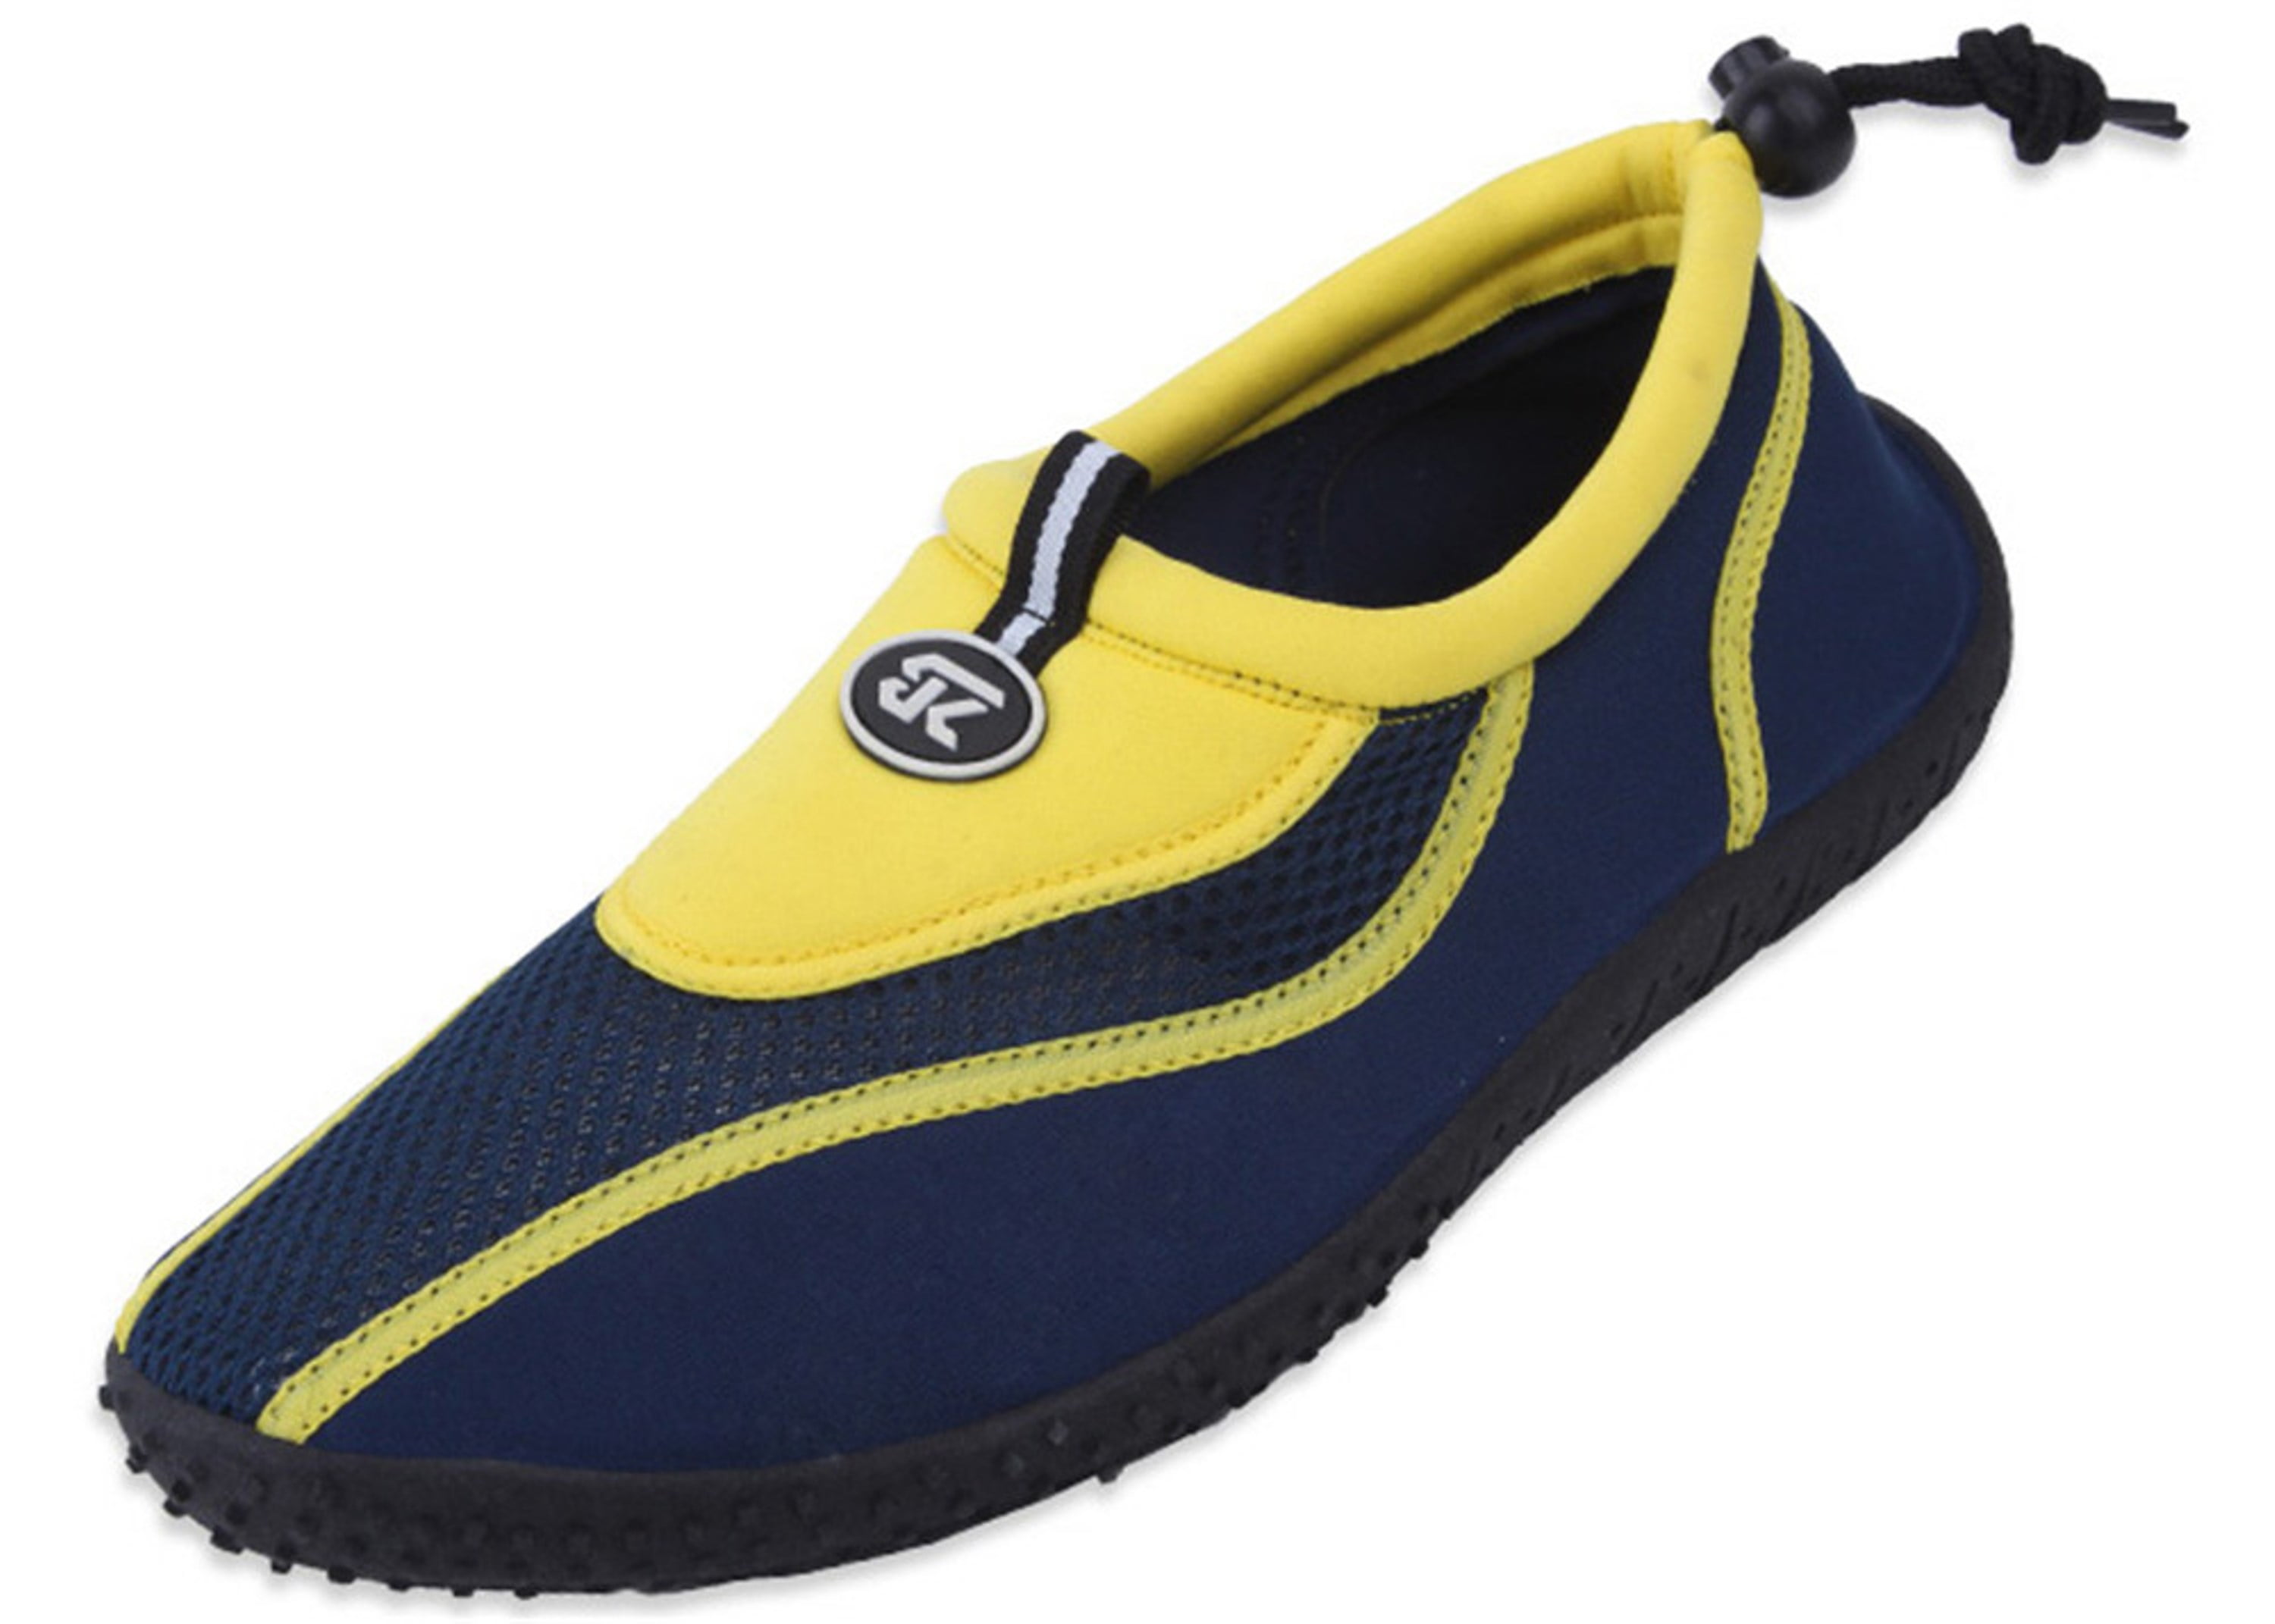 StarBay Men's Athletic Adjustable Water Shoes Aqua Socks Yellow Size 8